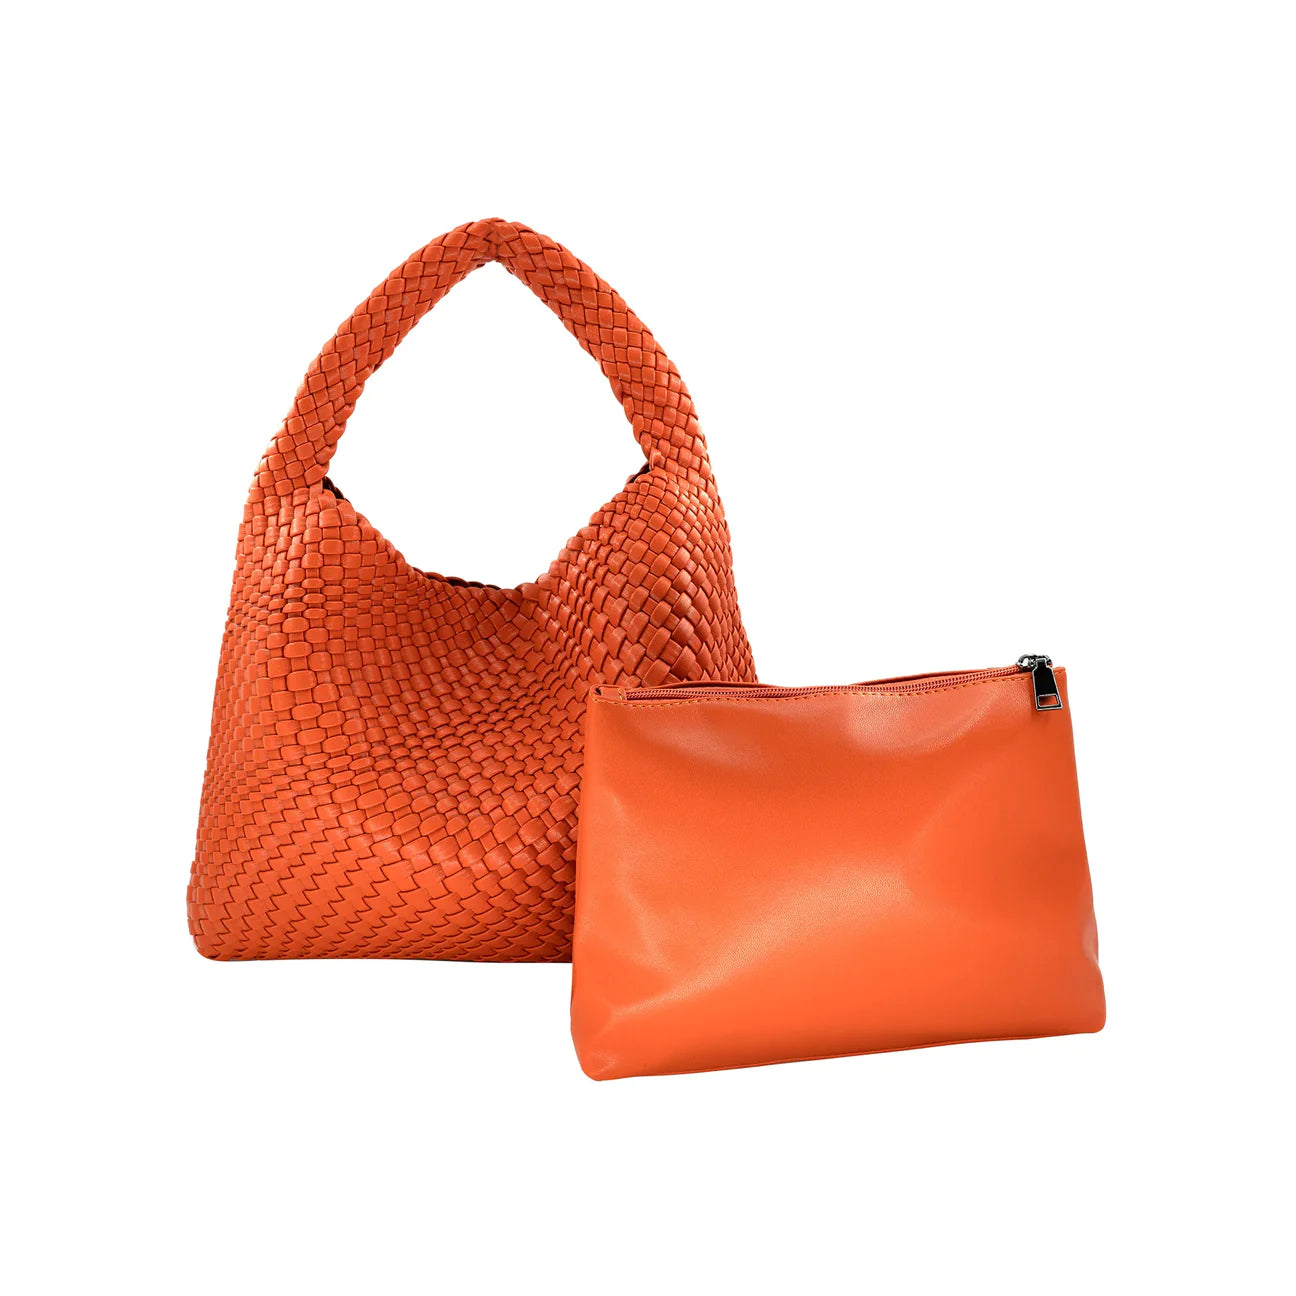 CHANEL Tote Beige Bags & Handbags for Women